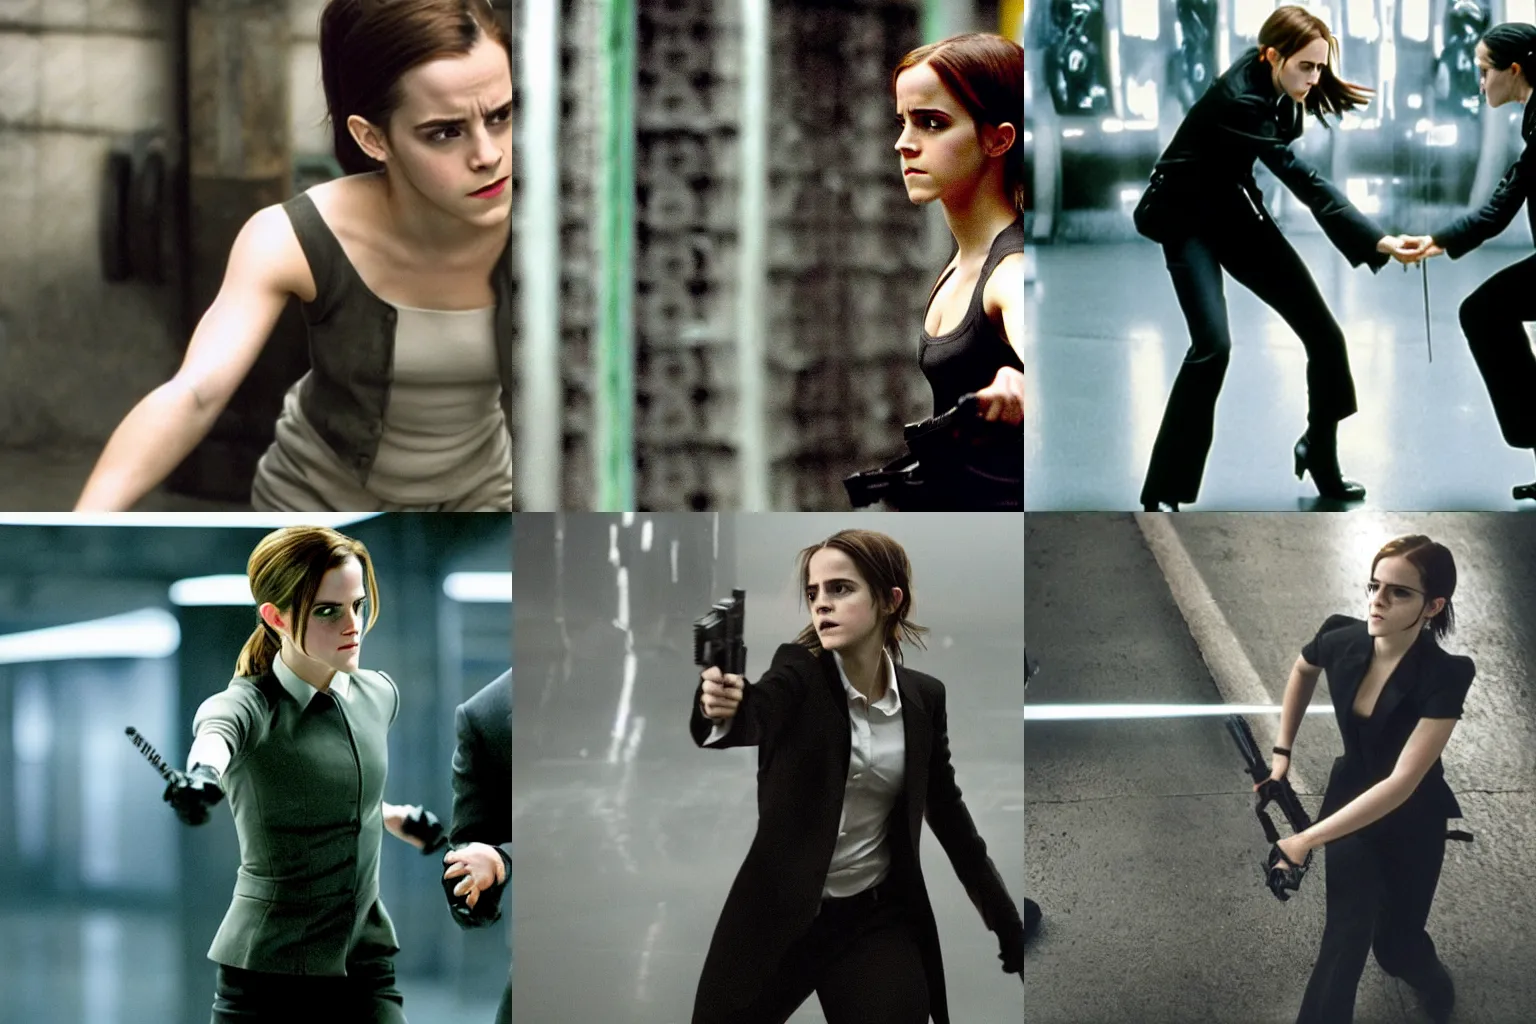 Prompt: Movie still of Emma Watson fighting against Agent Smith in Matrix